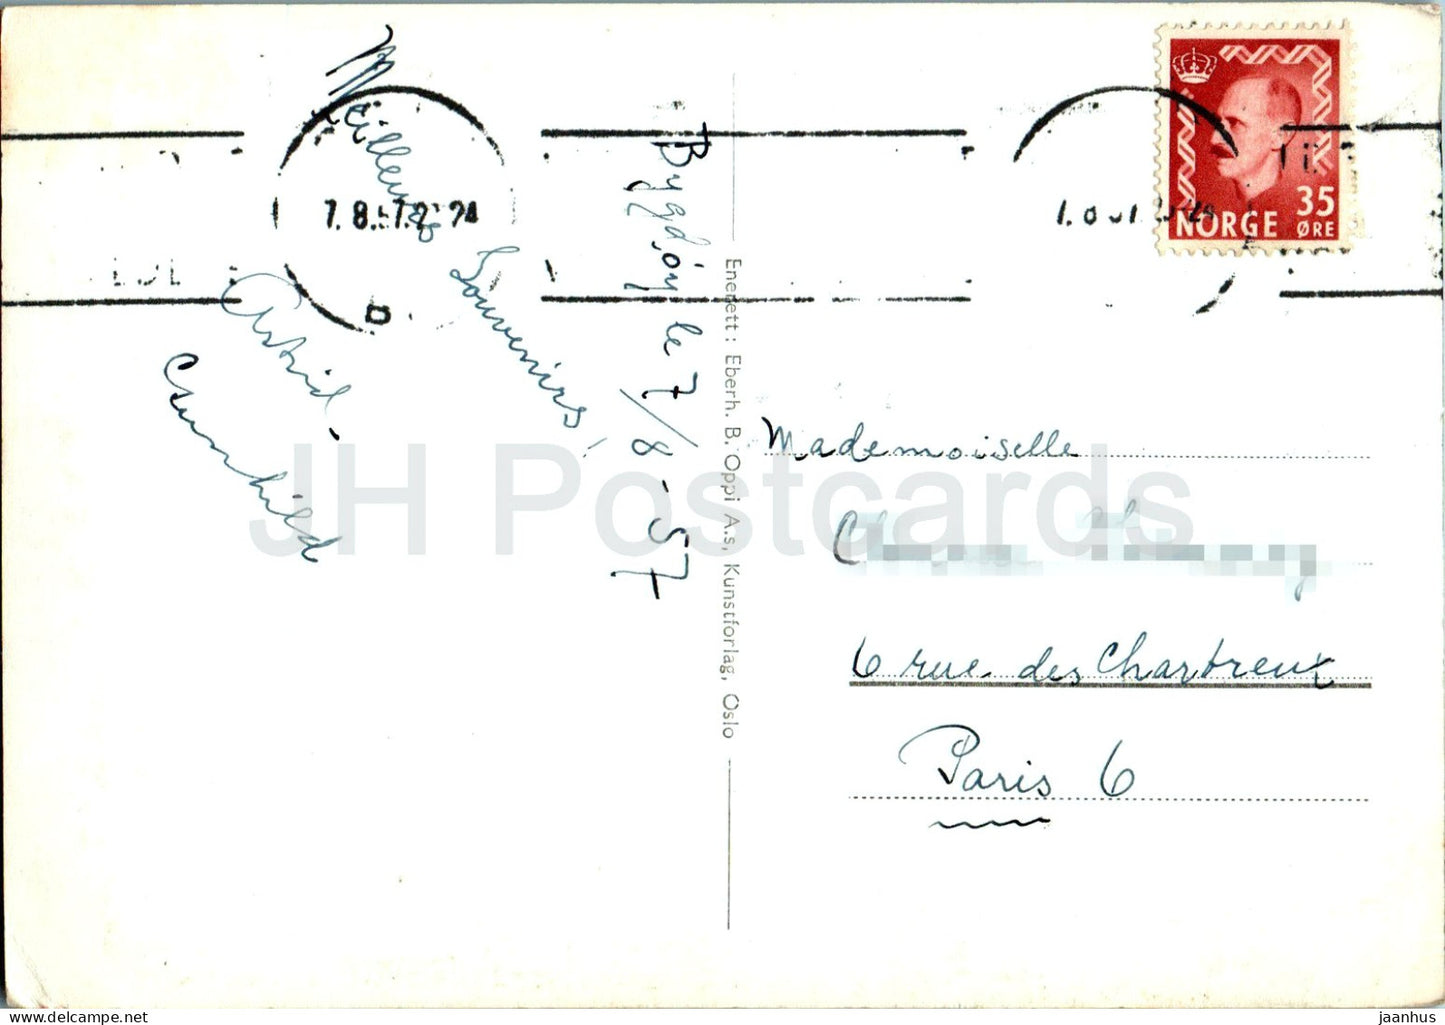 Oslo - Kongen og Dronningen - bateau - carte postale ancienne - 1957 - Norvège - utilisé 